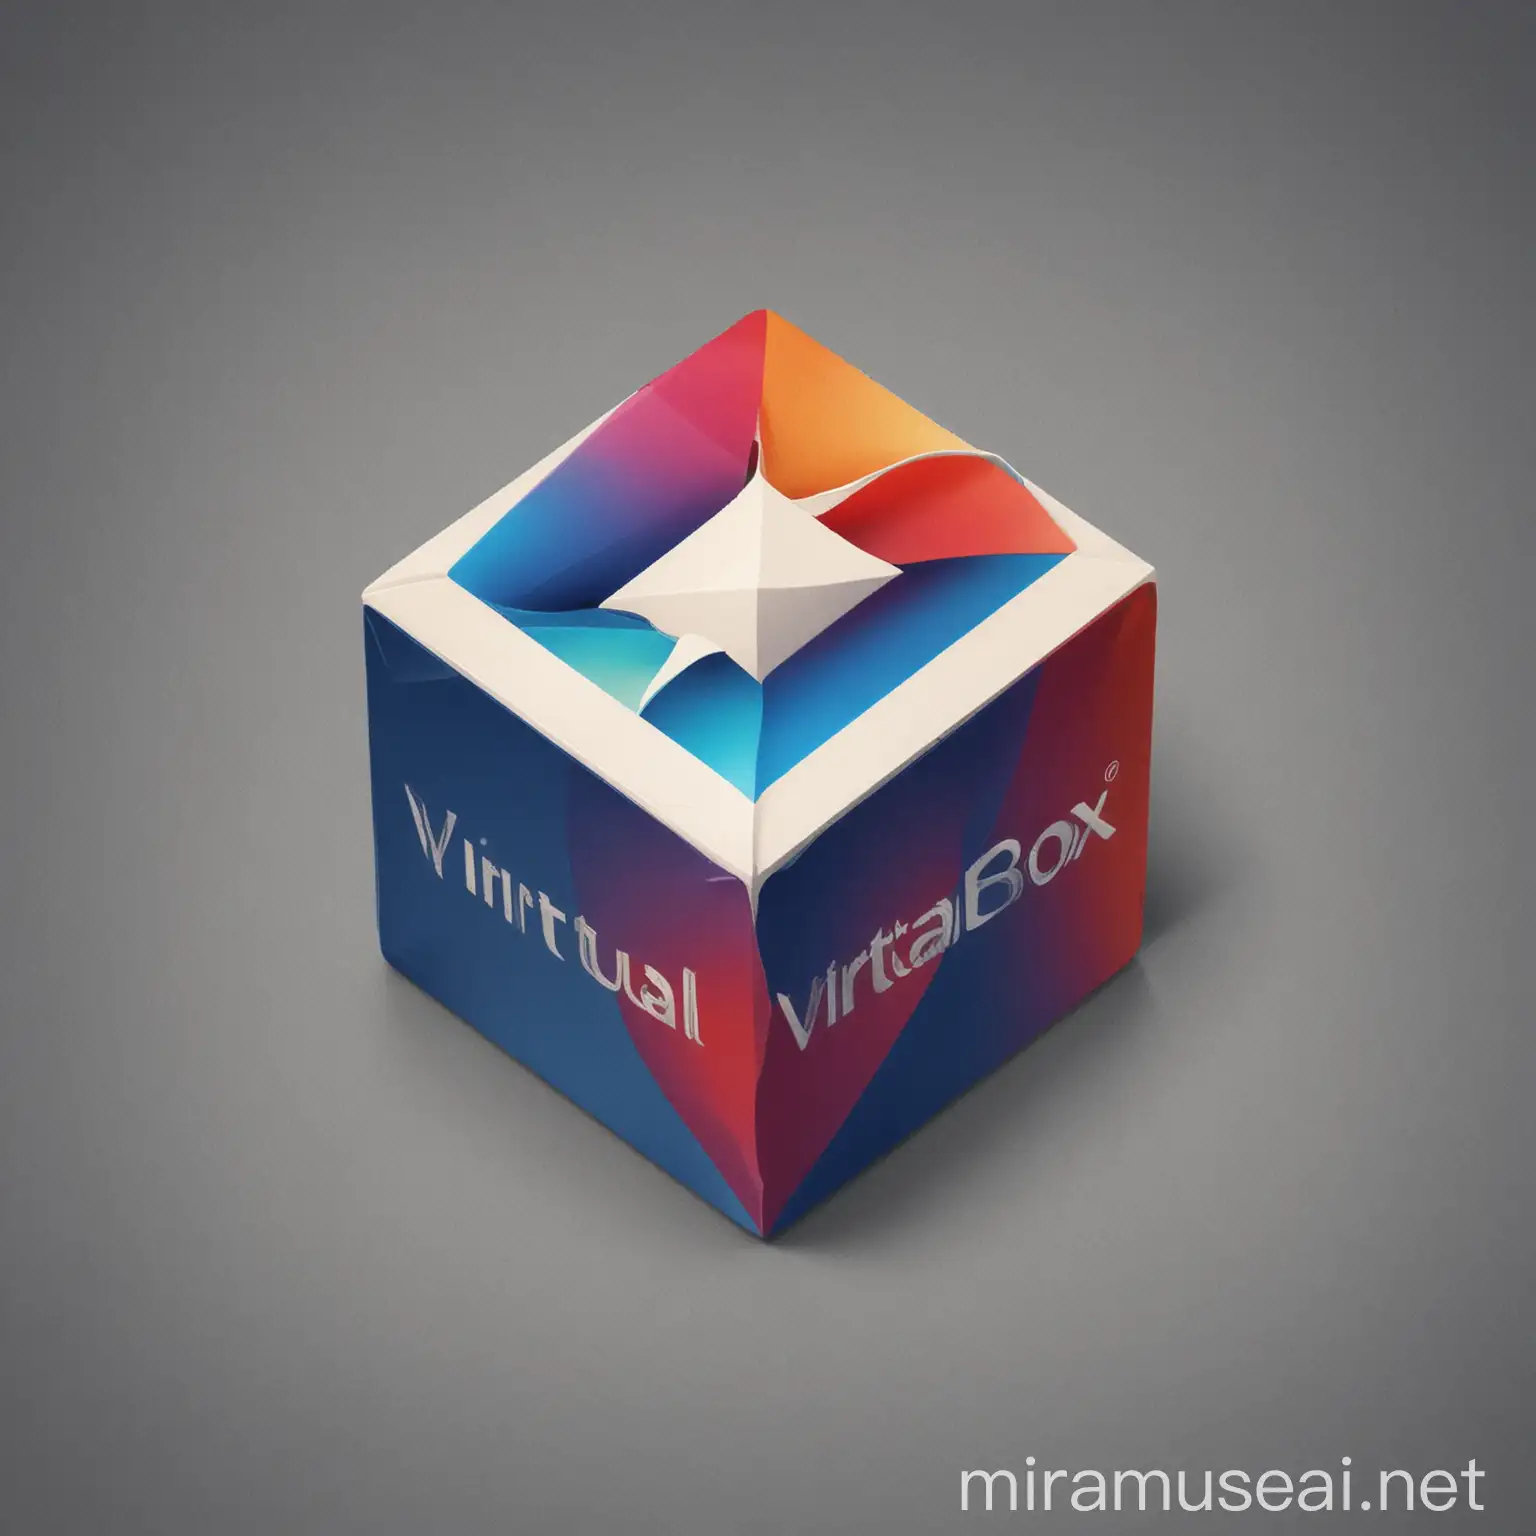 VirtualBox logo
More beautiful, more real